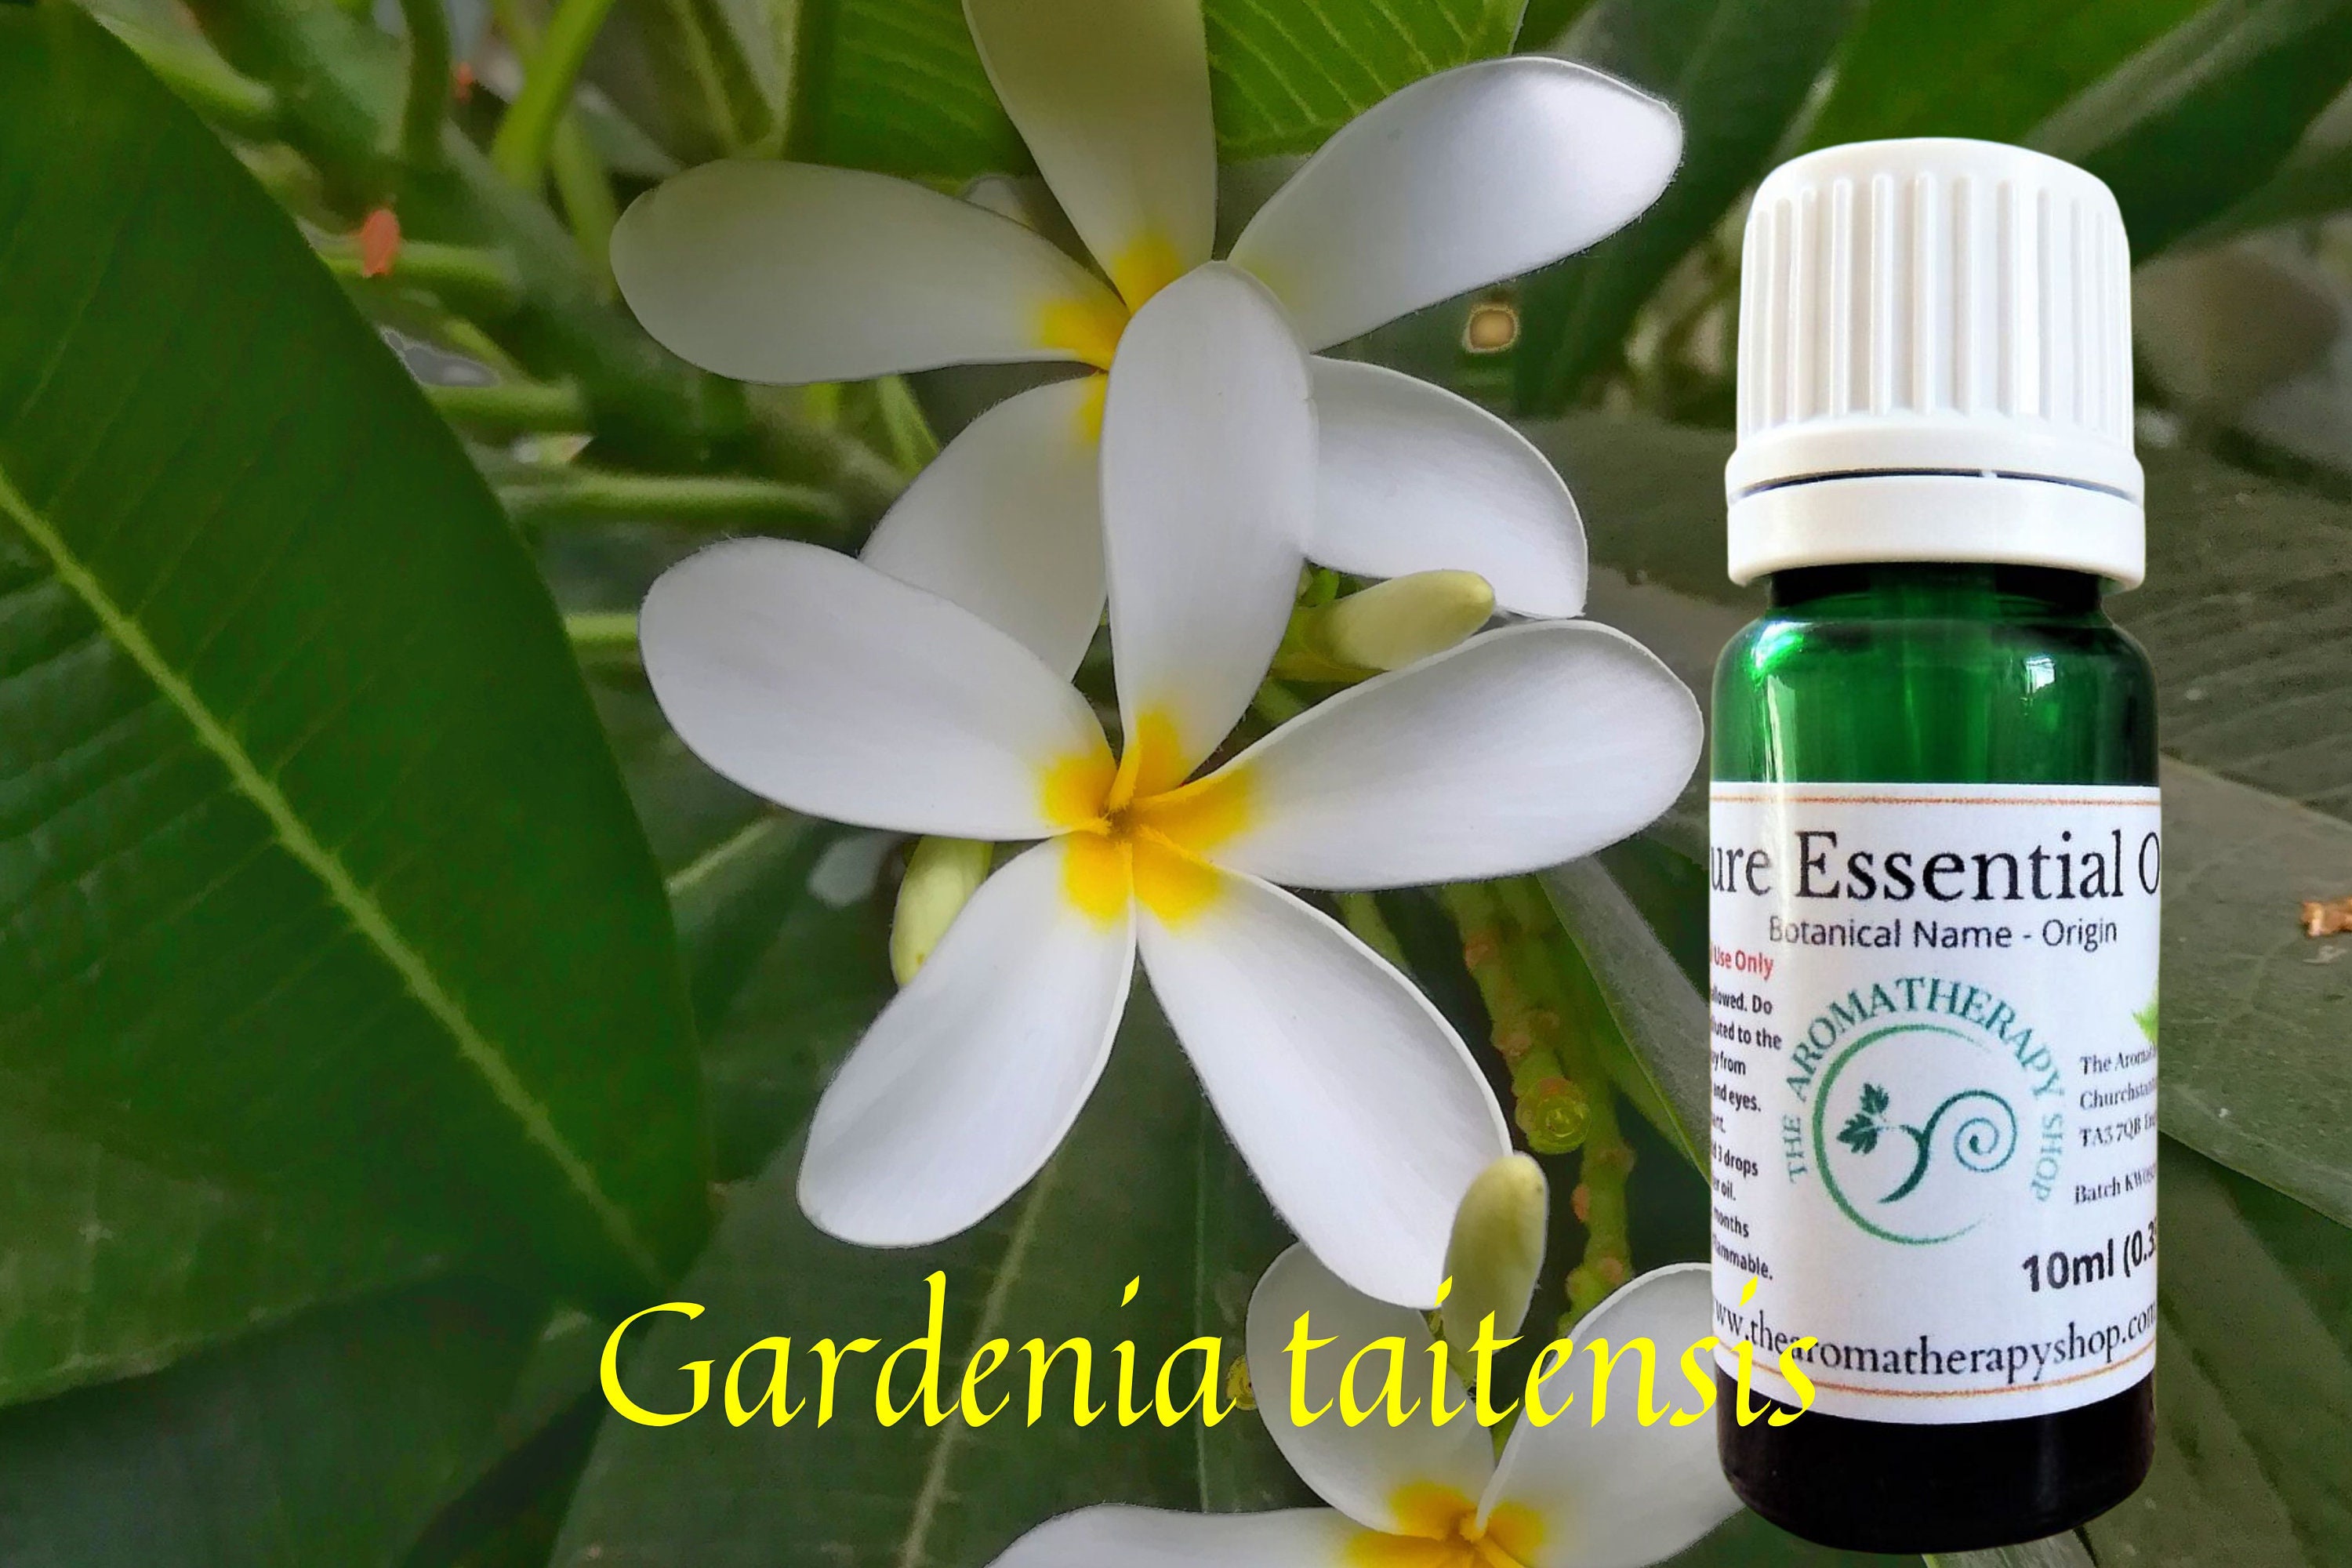 Gardenia Absolute Pure Undiluted Essential Oil 